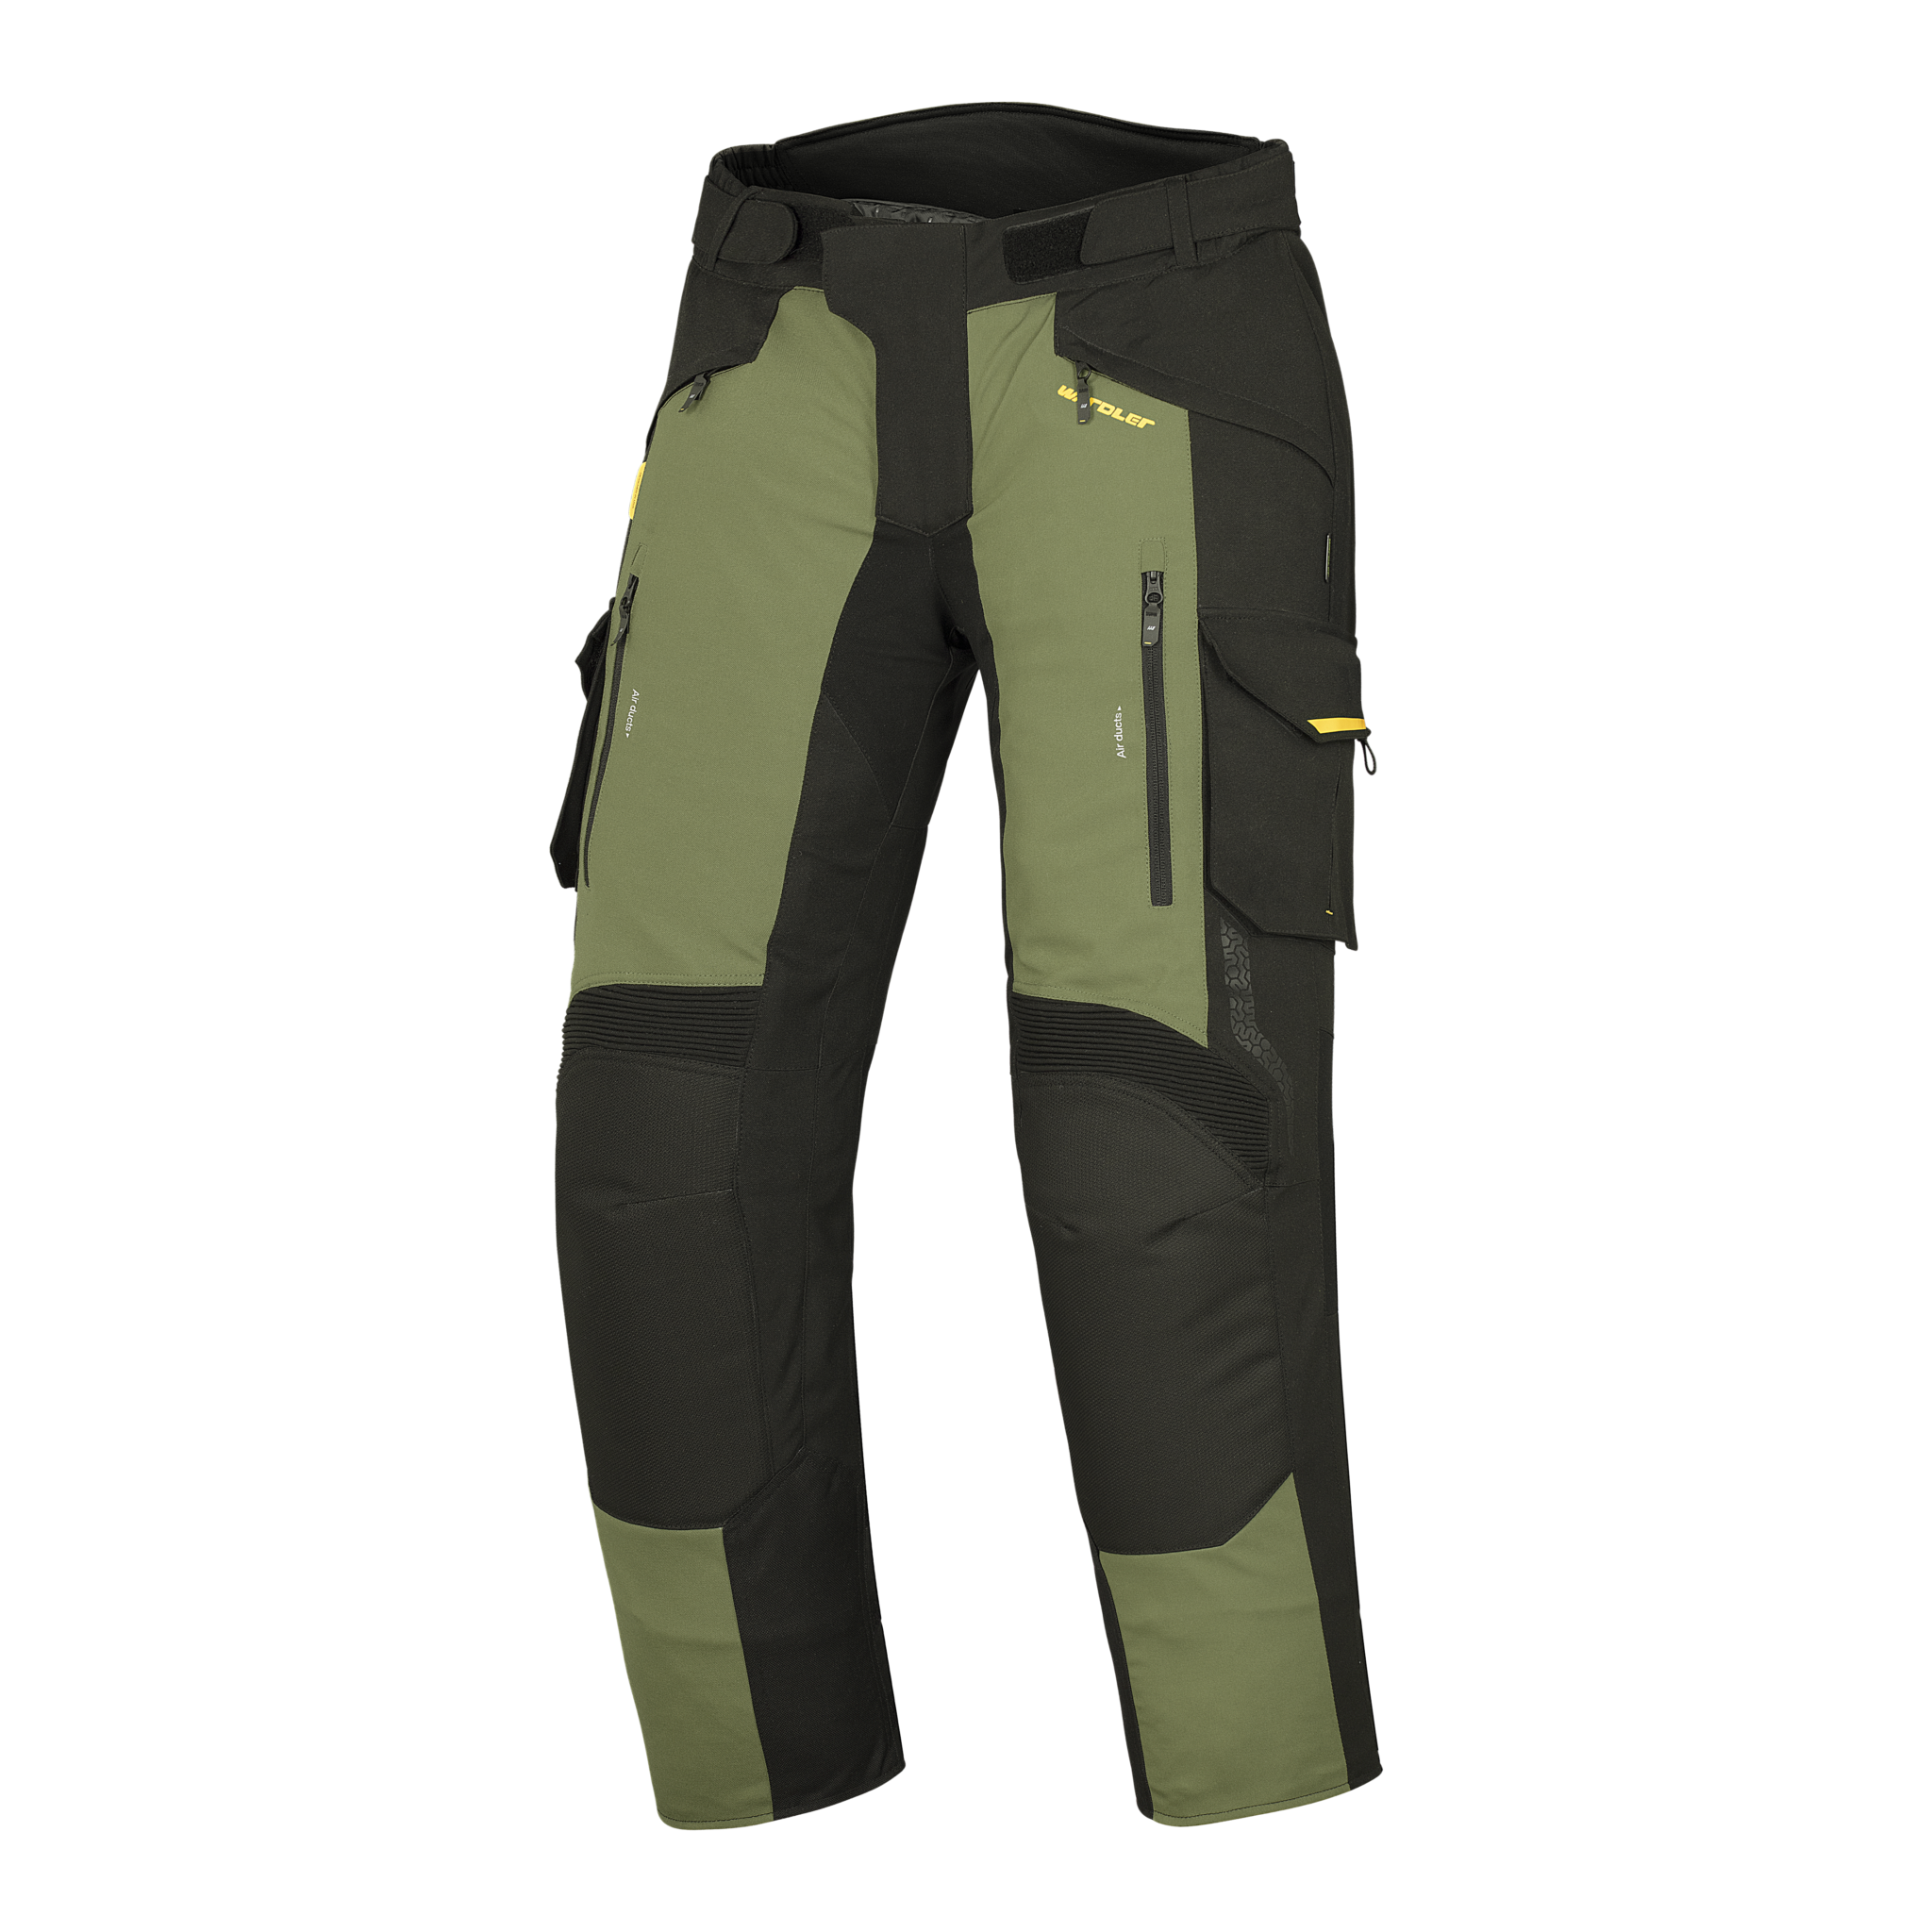 Wardler Bronco Adventure Motorcycle Pants, Black-Olive Green Front View